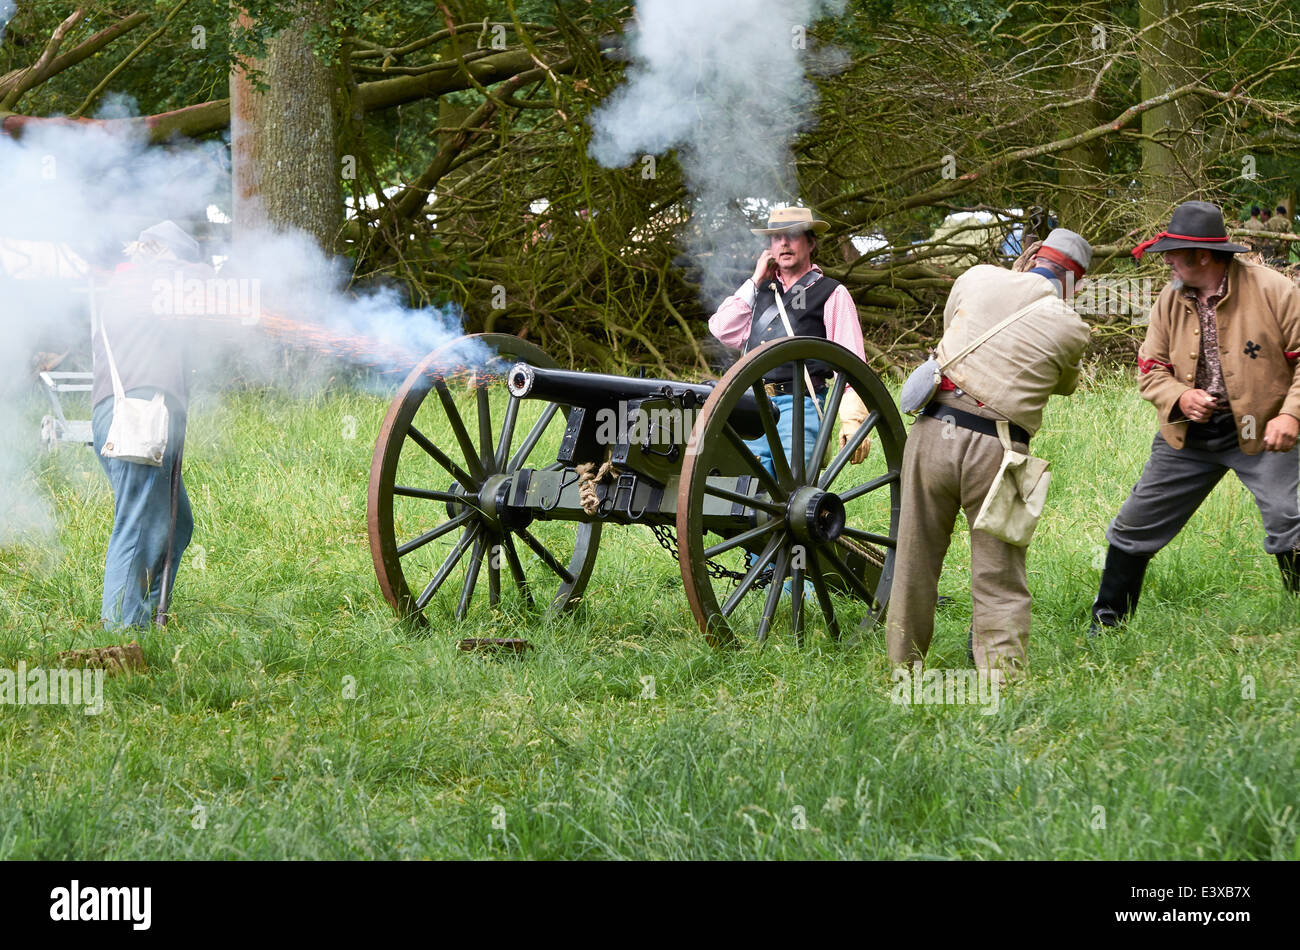 Actors in Confederate uniform firing a cannon as part of an American Civil War battle re-enactment. Stock Photo